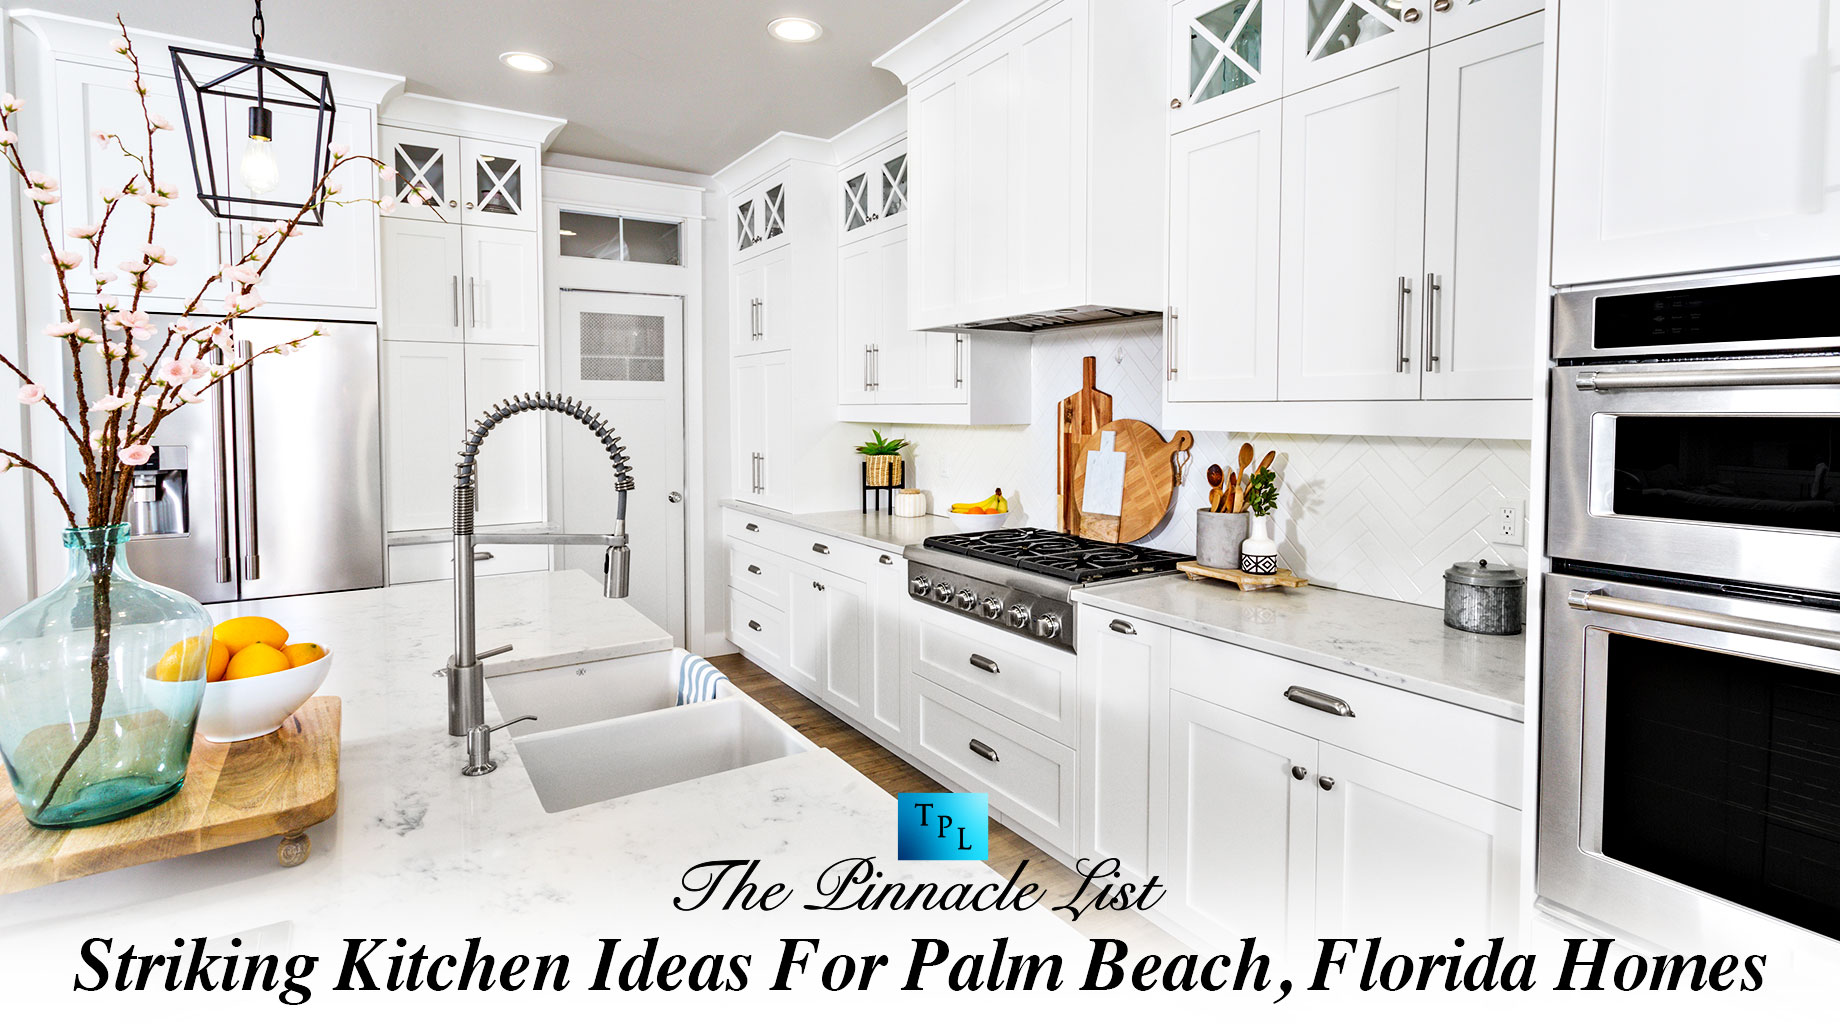 Striking Kitchen Ideas For Palm Beach, Florida Homes